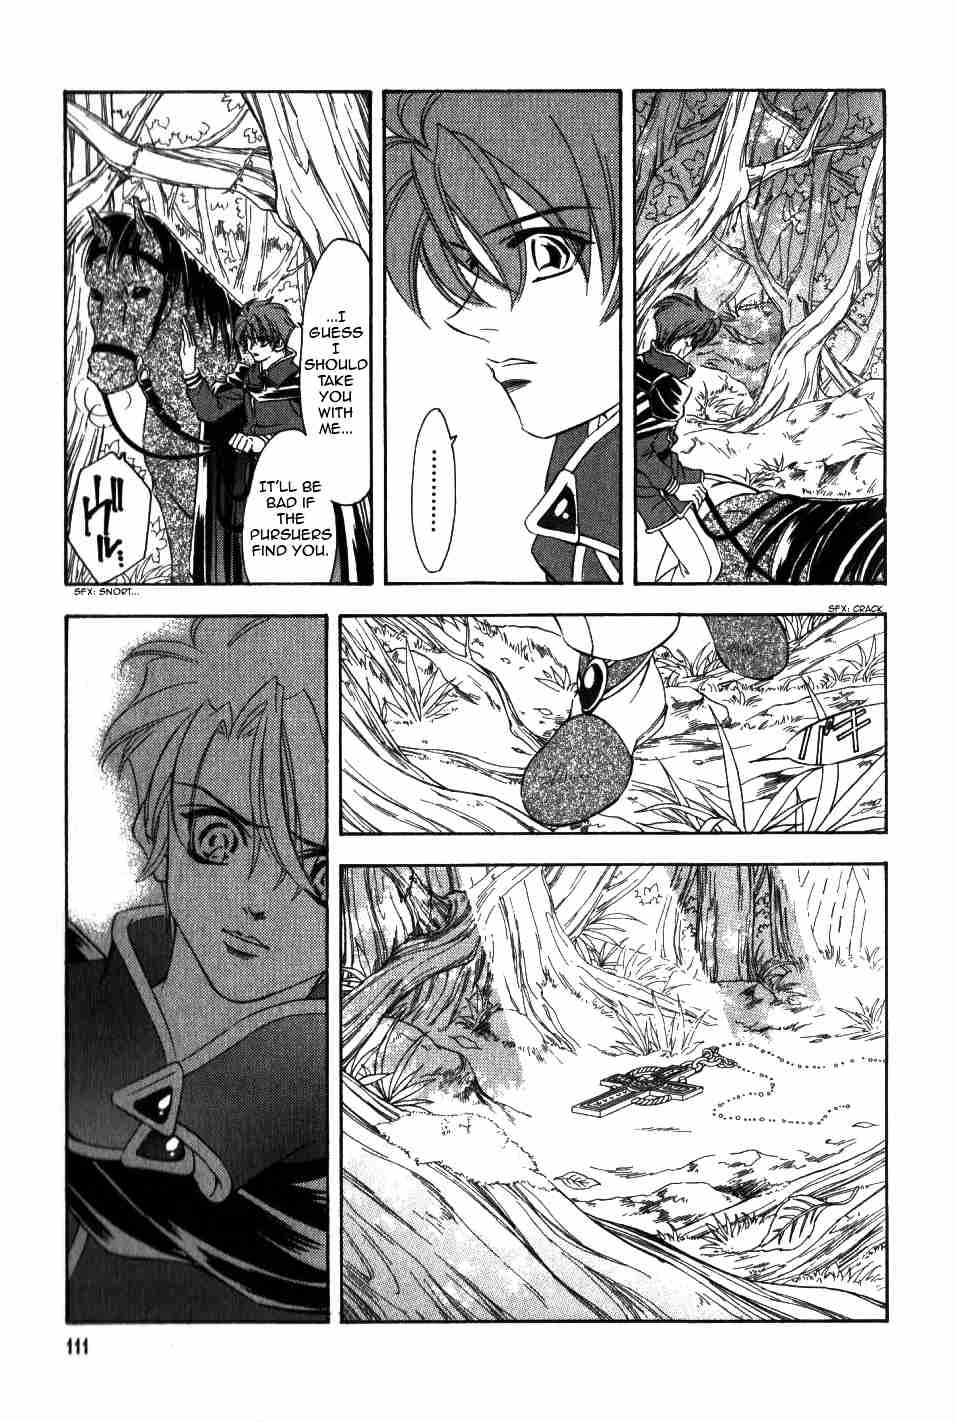 Fire Emblem Seisen no Keifu Vol. 8 Ch. 51